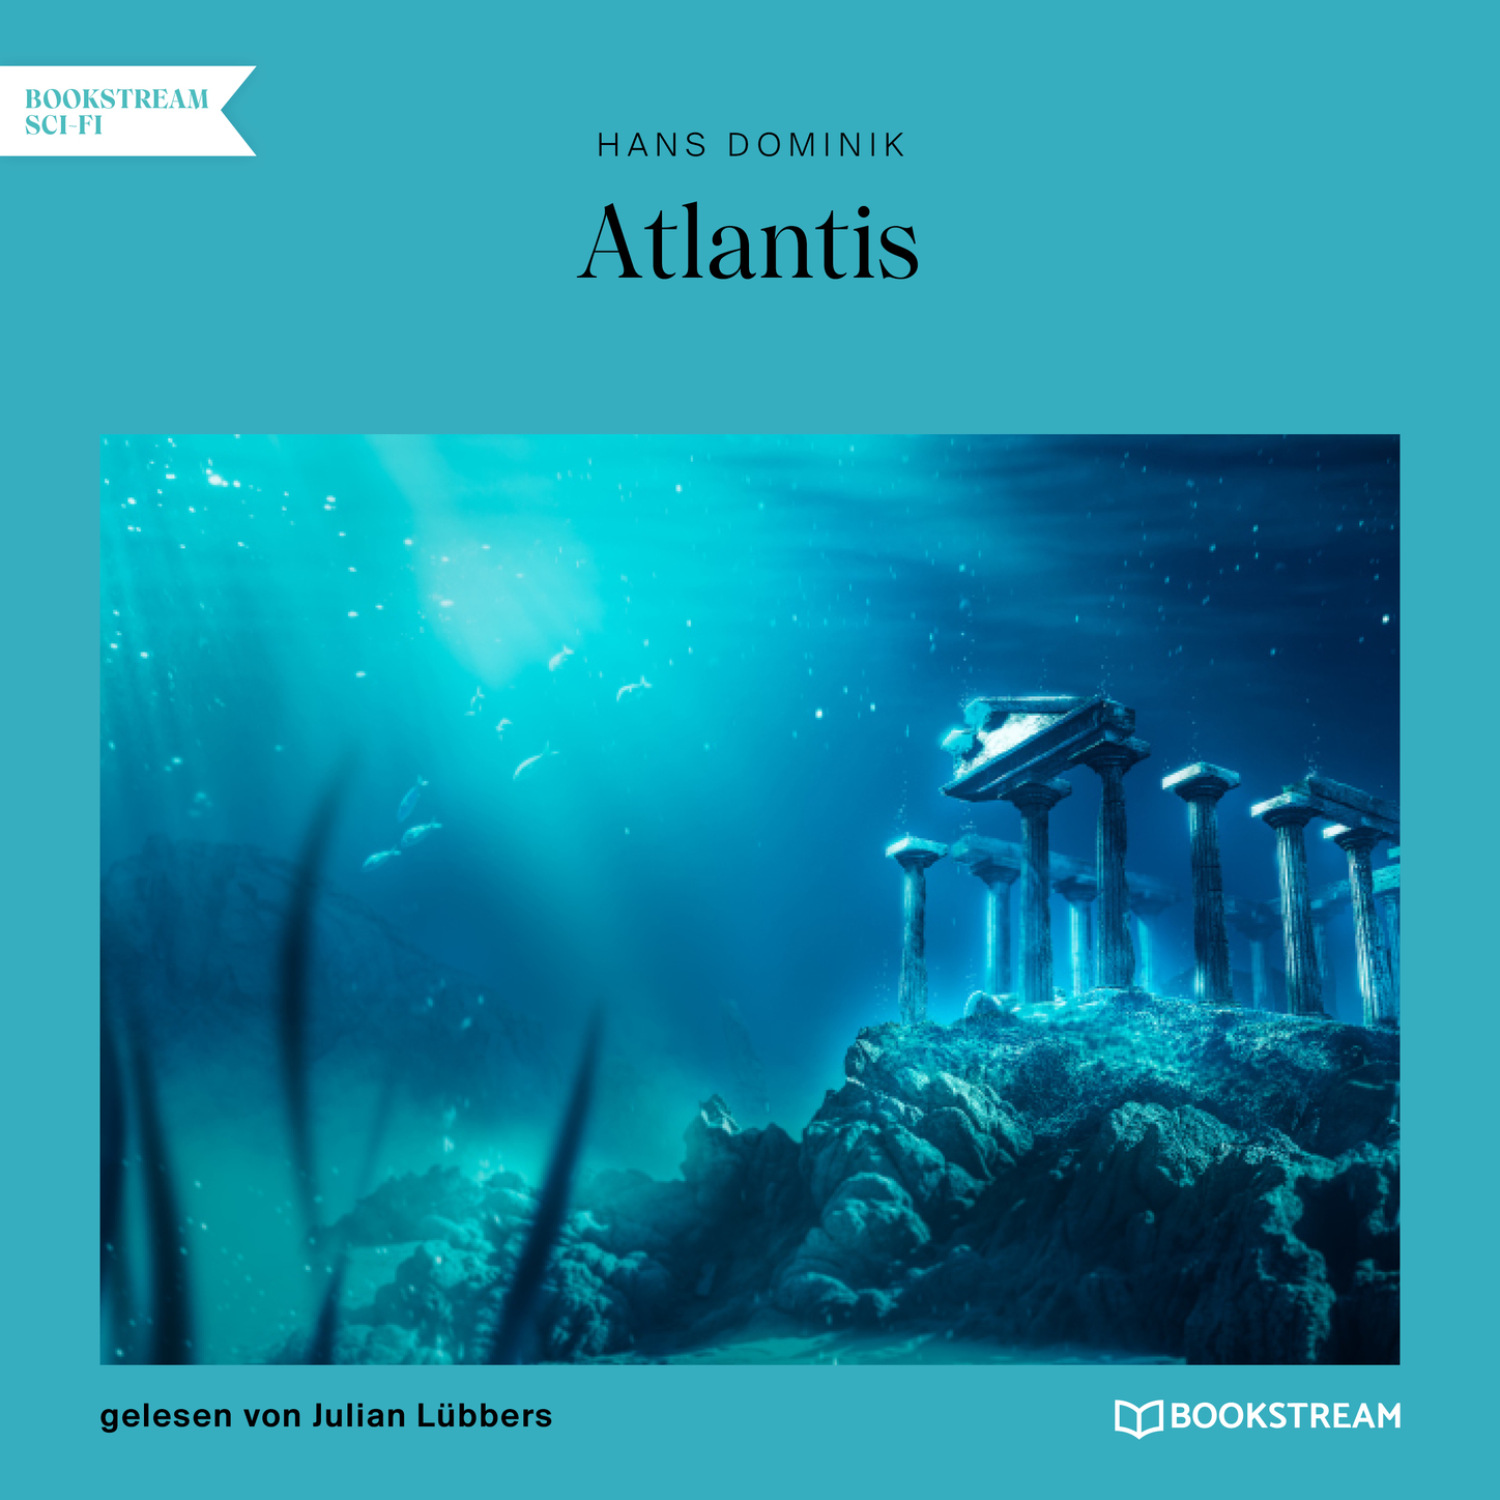 Atlantis mp3. Dominik, Hans. BOOKSTREAM. Морская вода Атлантис отзывы.